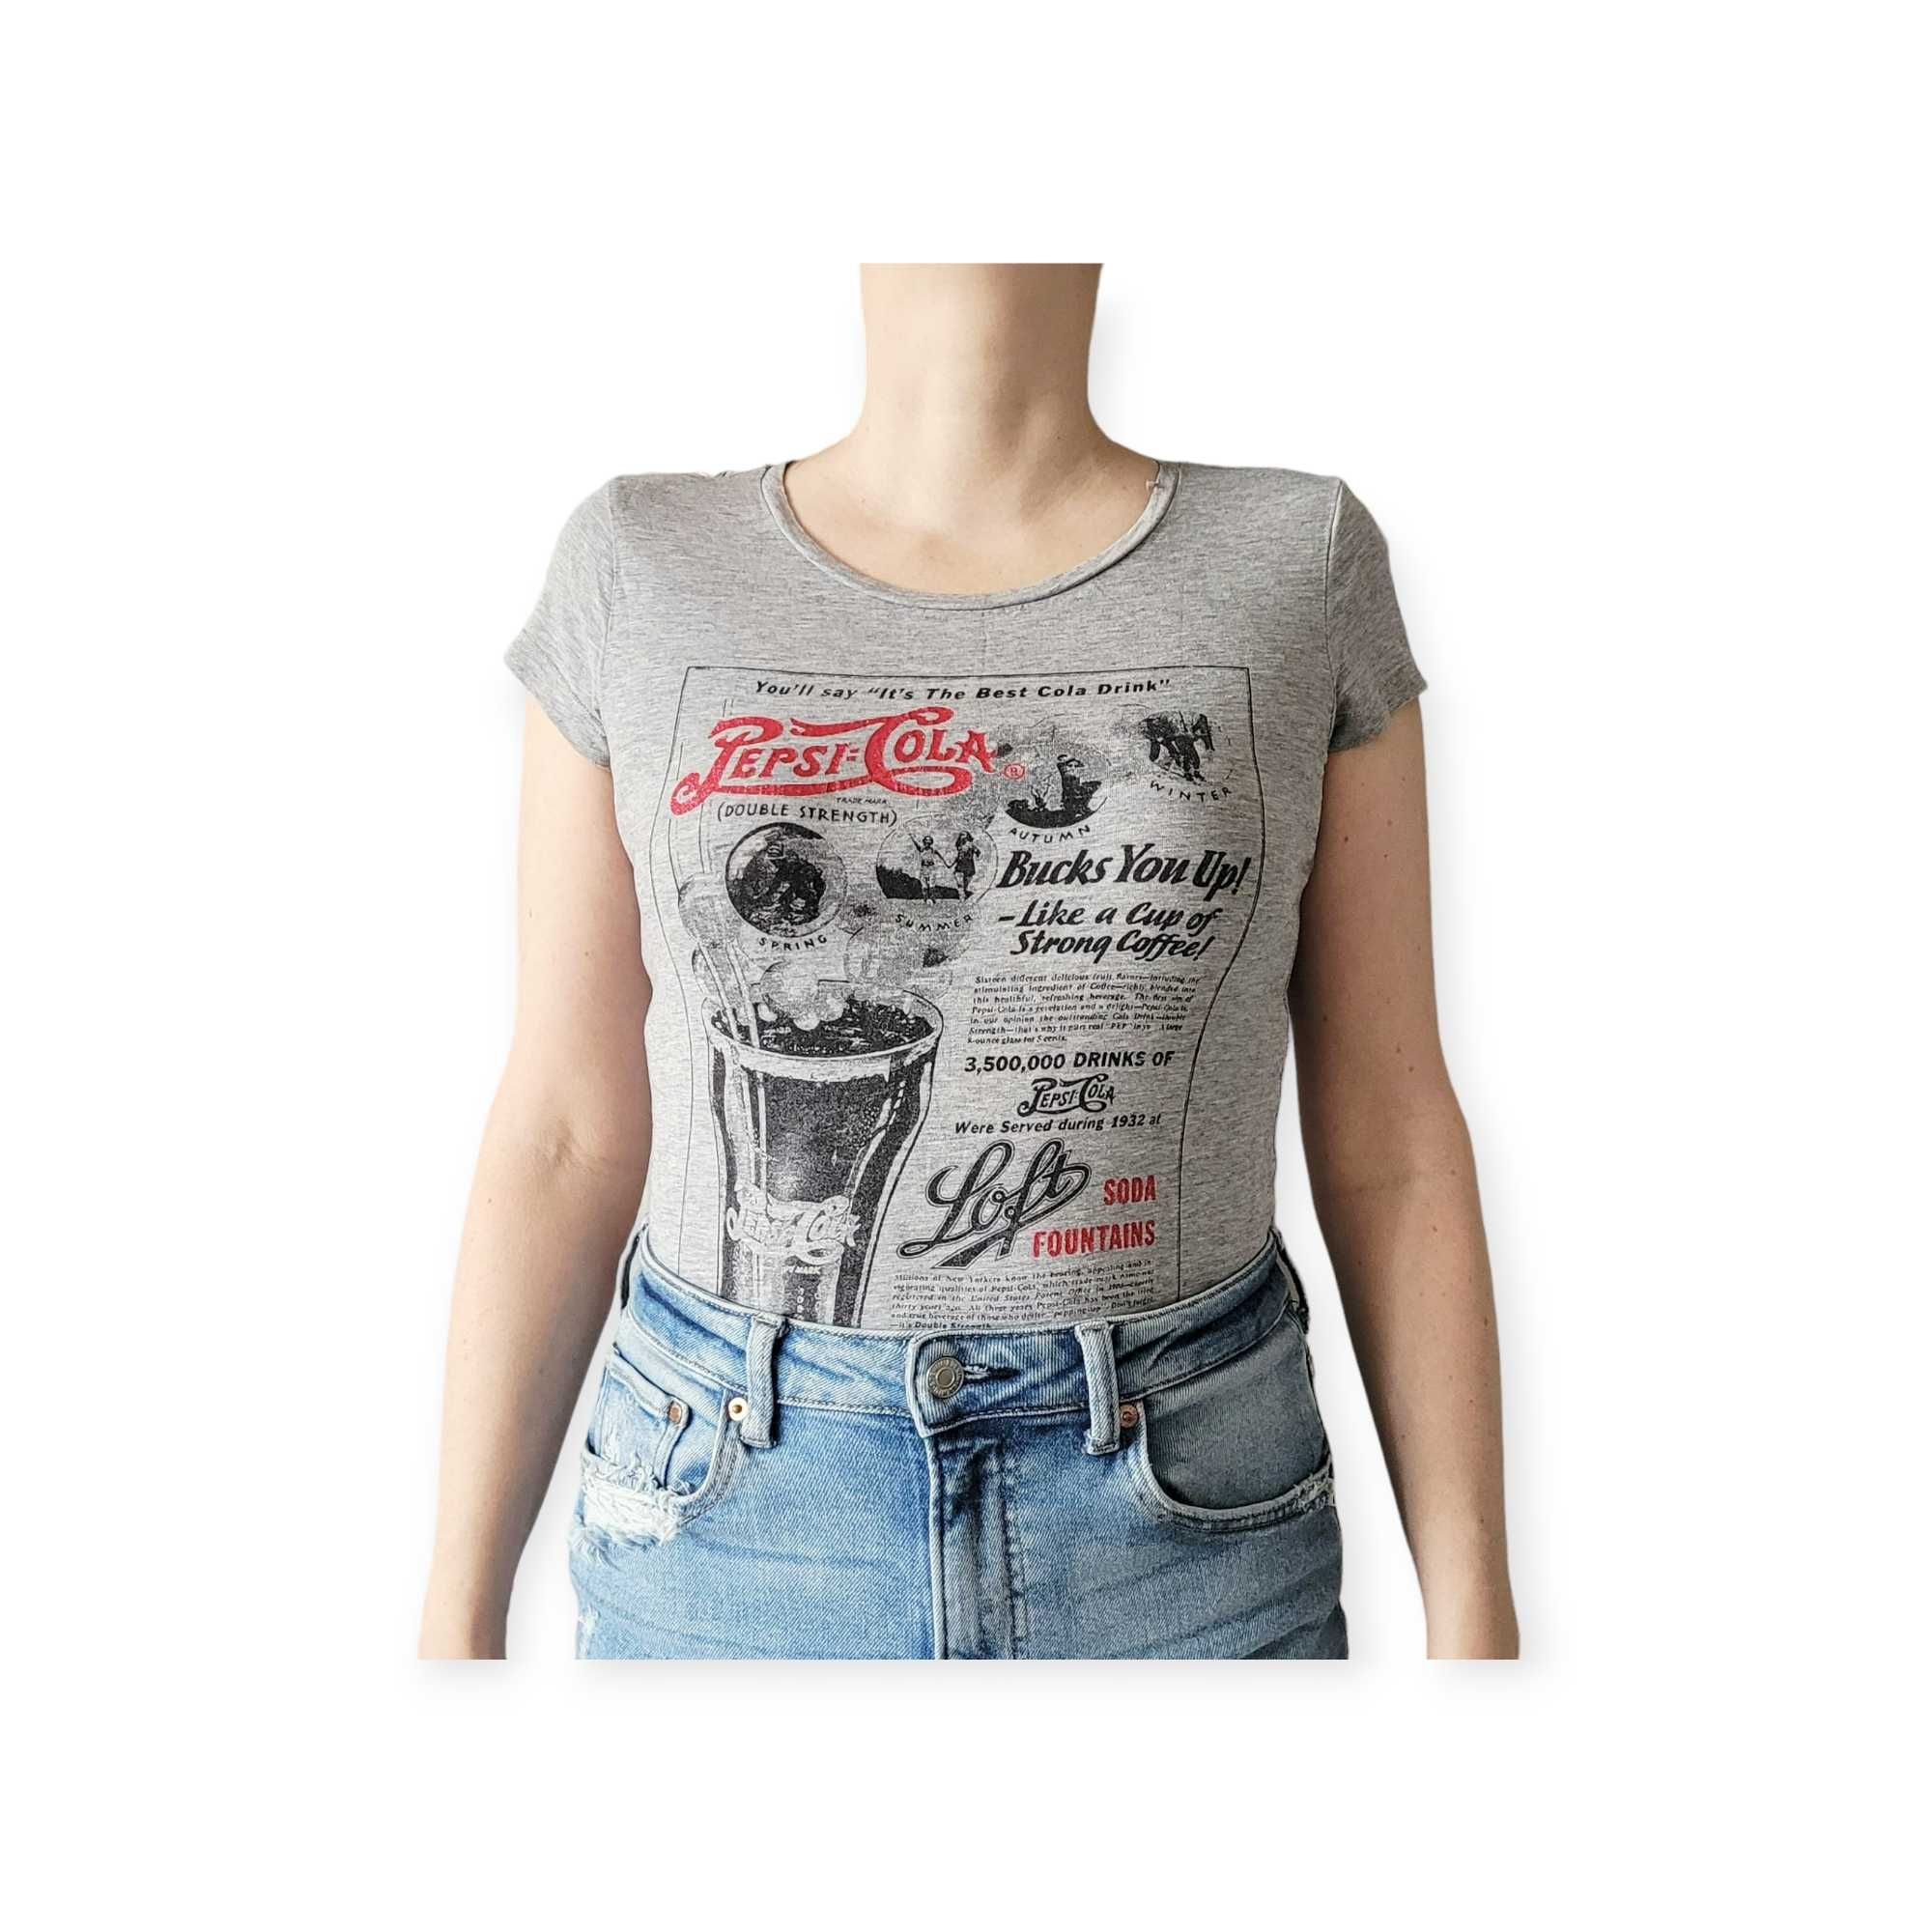 Szara koszulka M damska krótki rękaw damska t-shirt Pepsi Cola casual